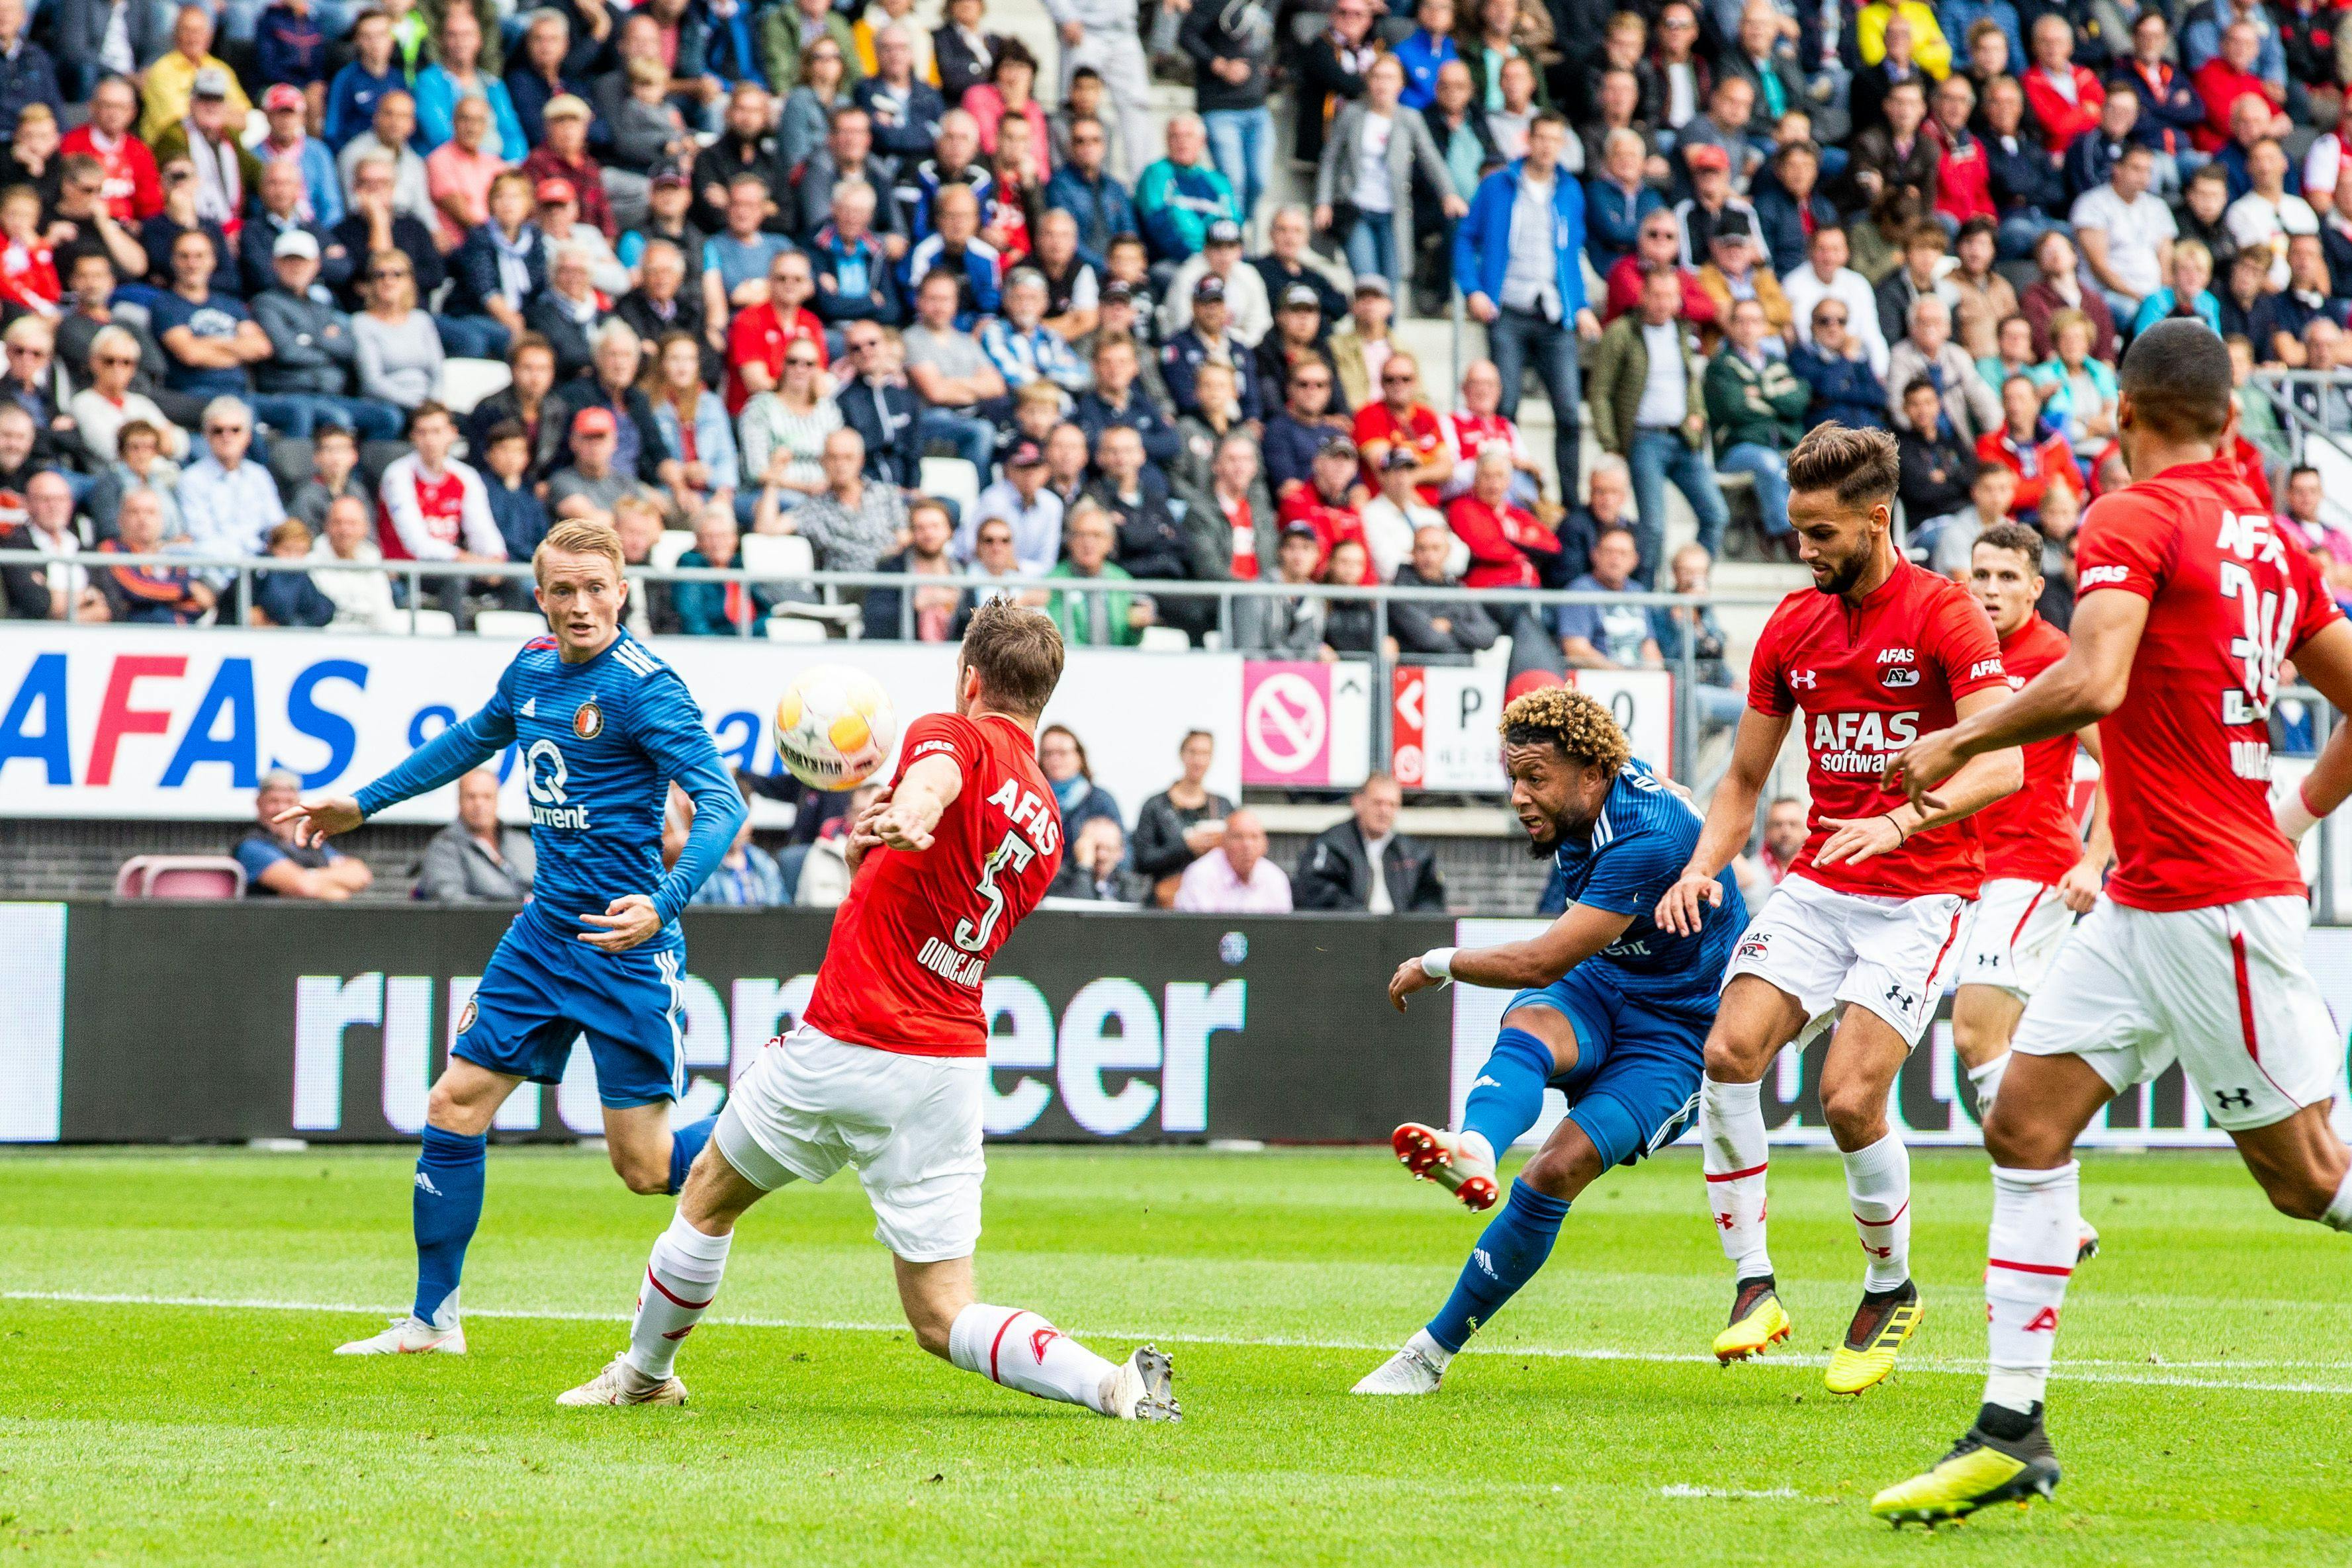 Feyenoord vs Slavia Prague Prediction and Betting Tips